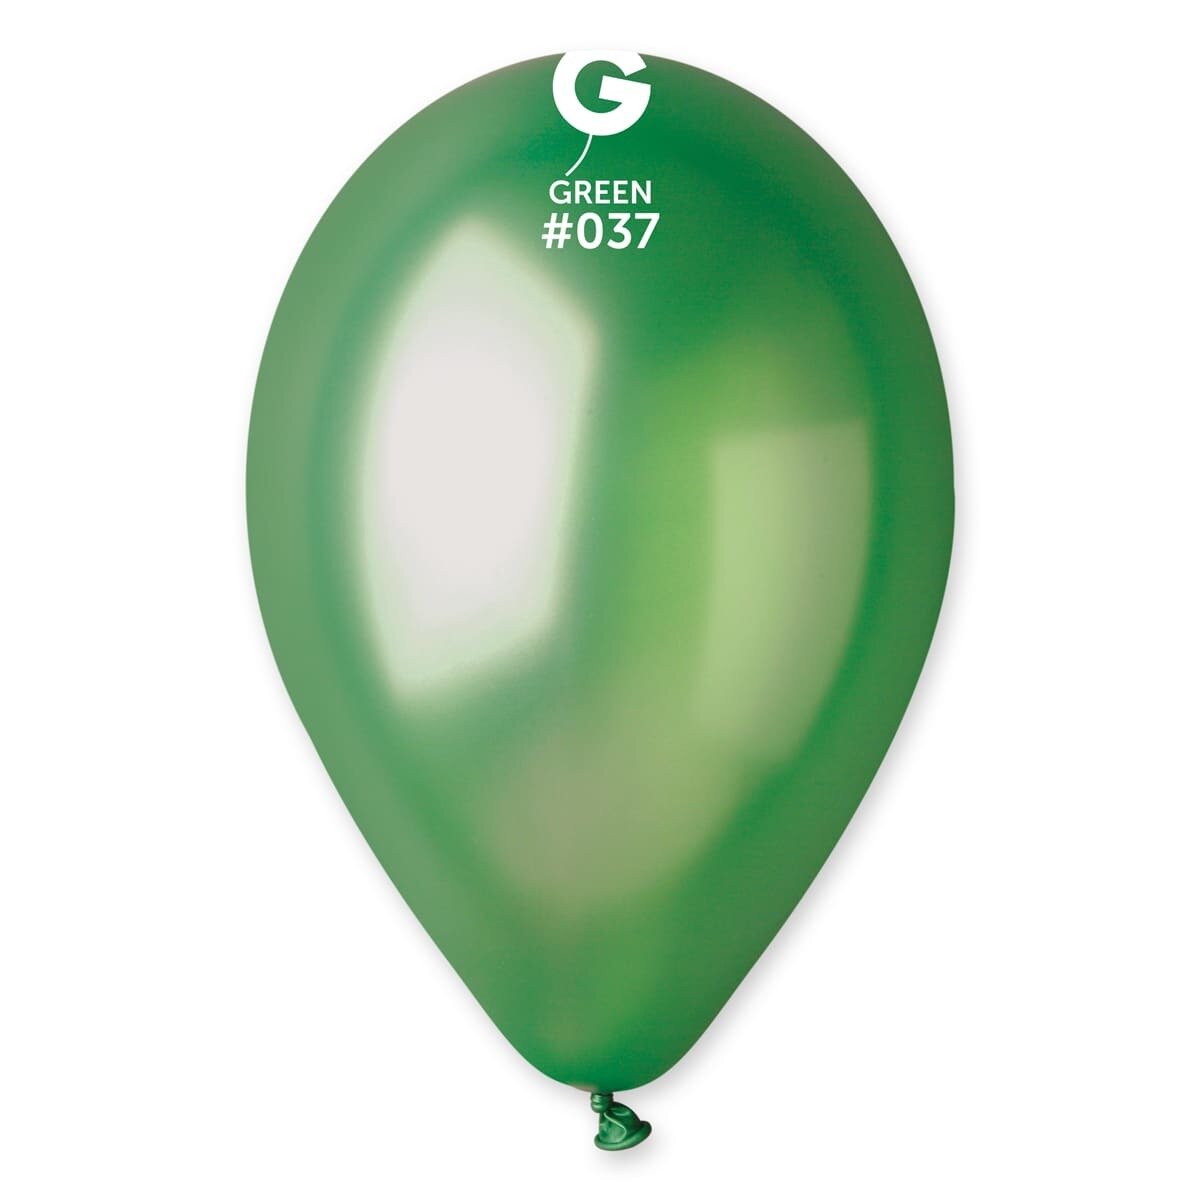 GM110: #037 Metal Green 113709 Metallic Color 12 in